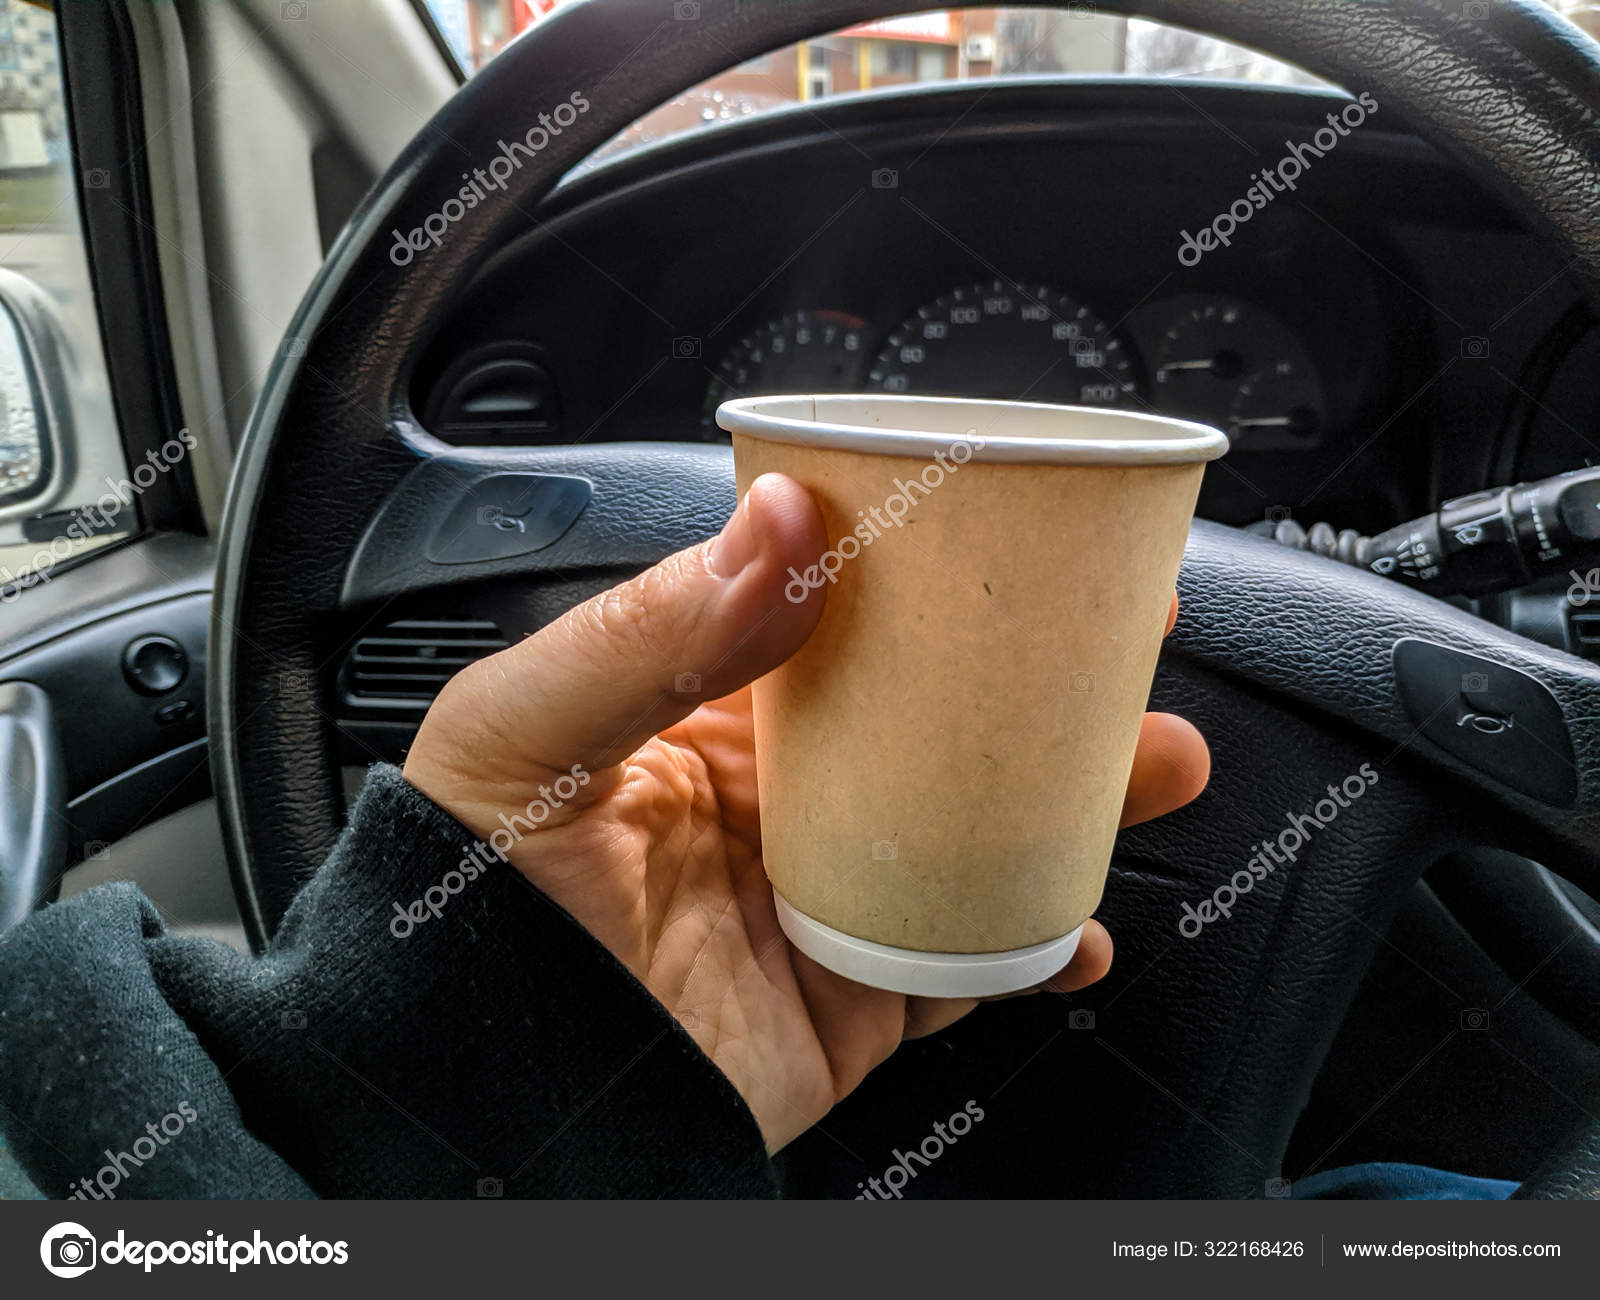 https://st3.depositphotos.com/1068304/32216/i/1600/depositphotos_322168426-stock-photo-coffee-car-coffee-cup.jpg